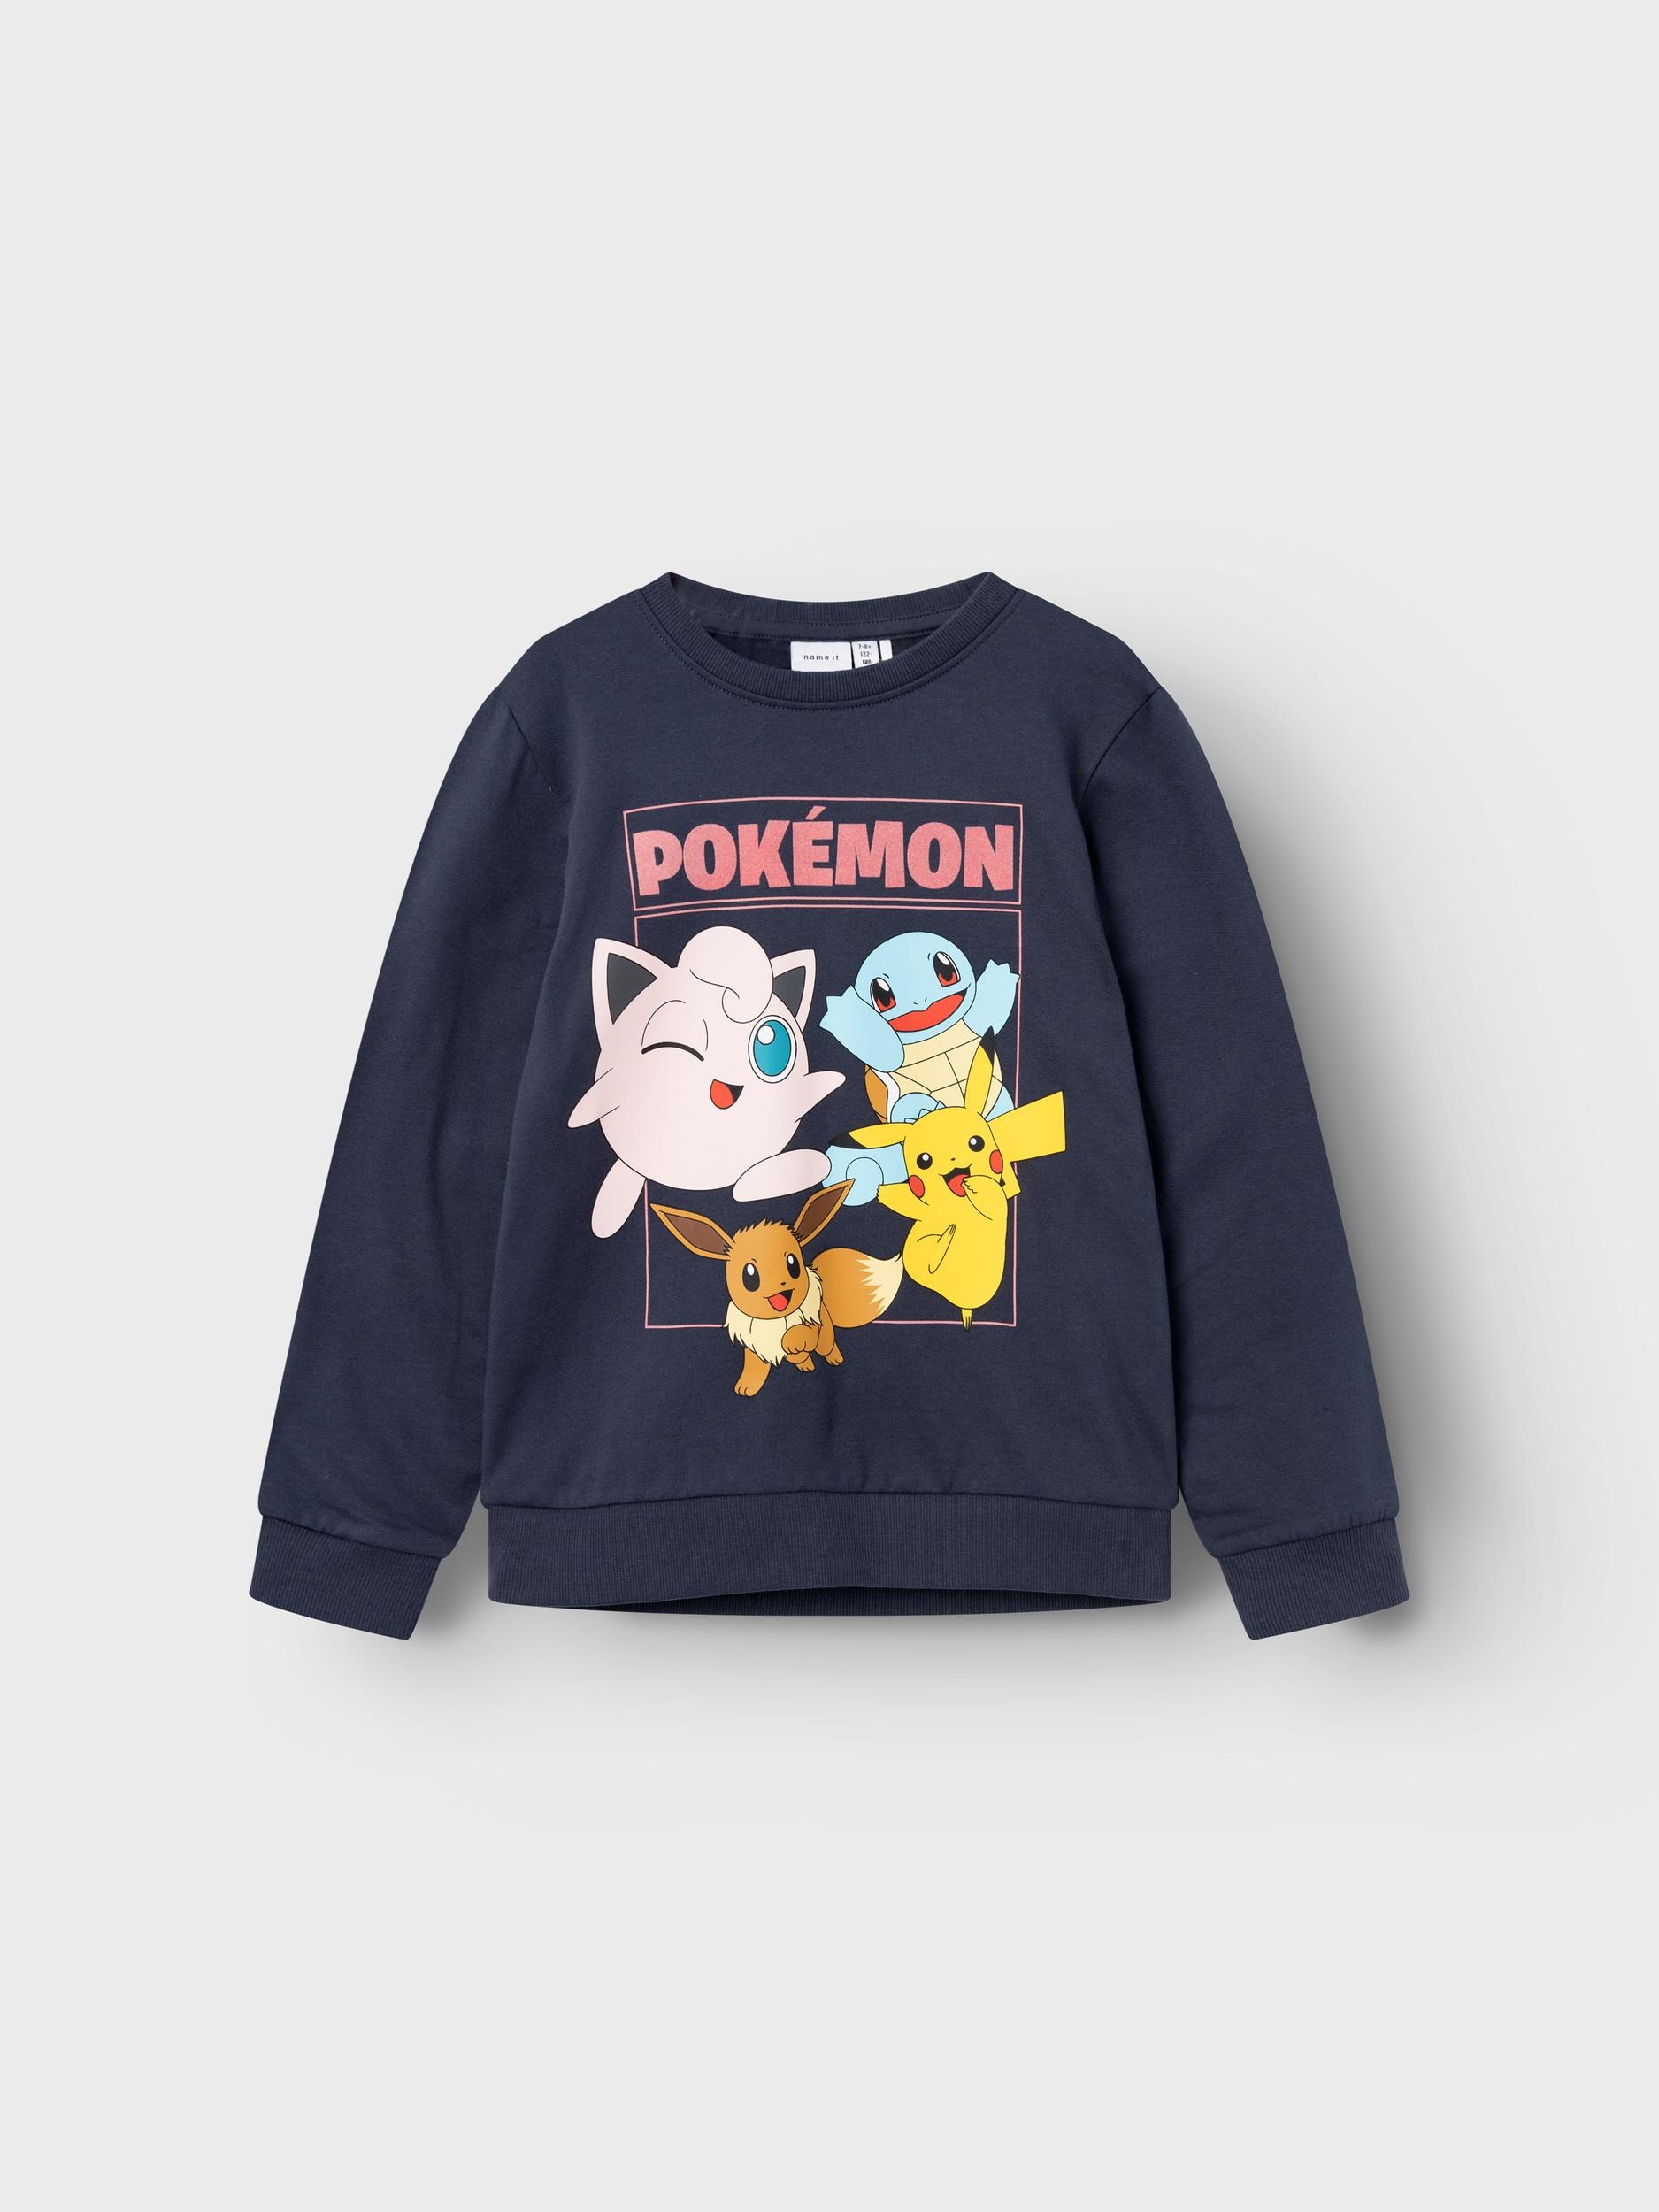 Name Print »NKFOMBA mit It coolem Sweatshirt POKEMON Pokemon SWEAT bestellen | BAUR BRU«,